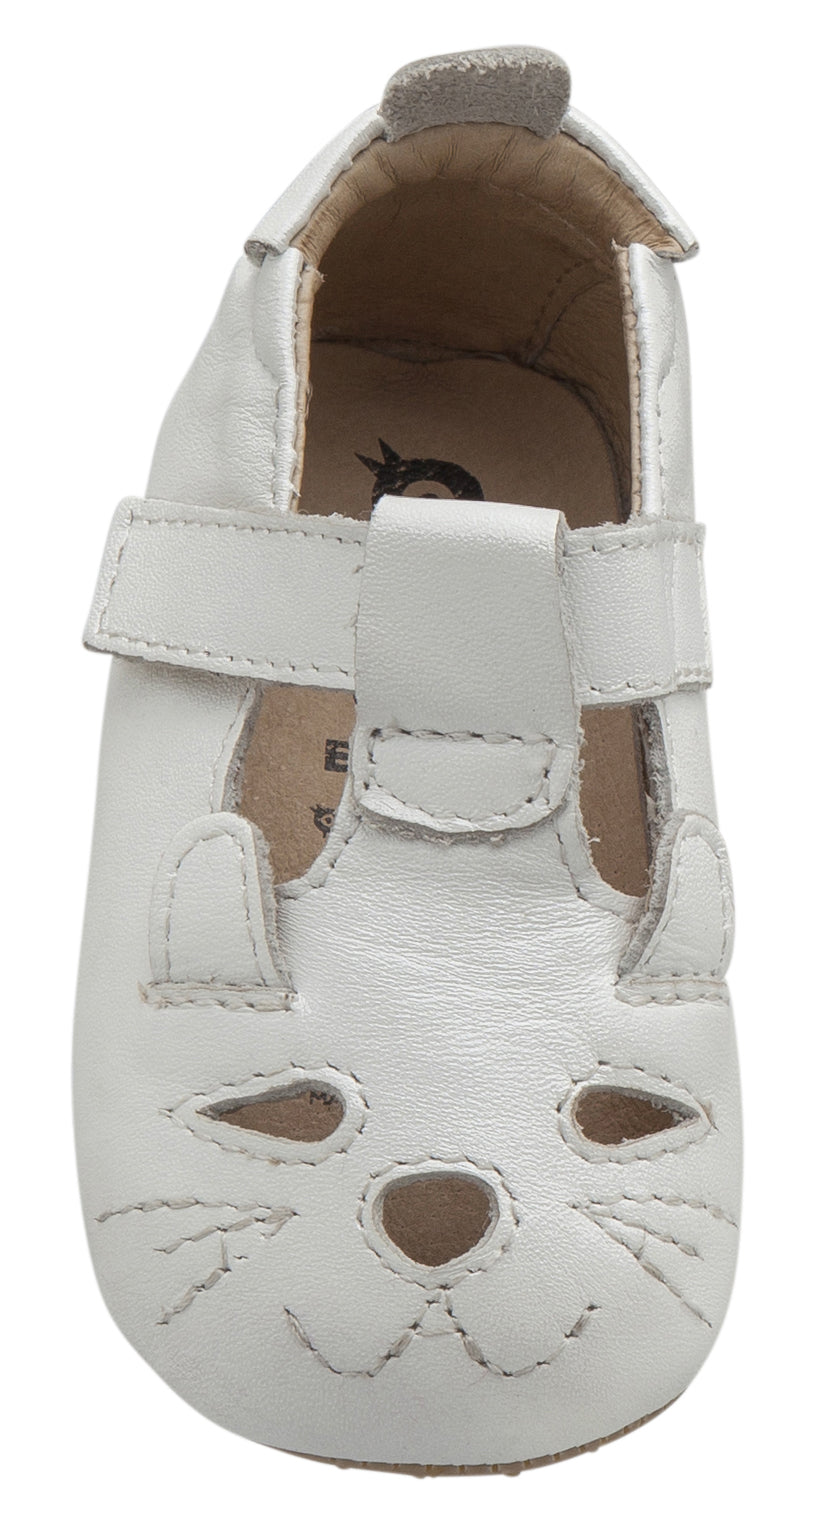 Old Soles Girl's 006 Cutesy Shoe Kitty Detail Nacardo Blanco Leather Mary Jane Flats